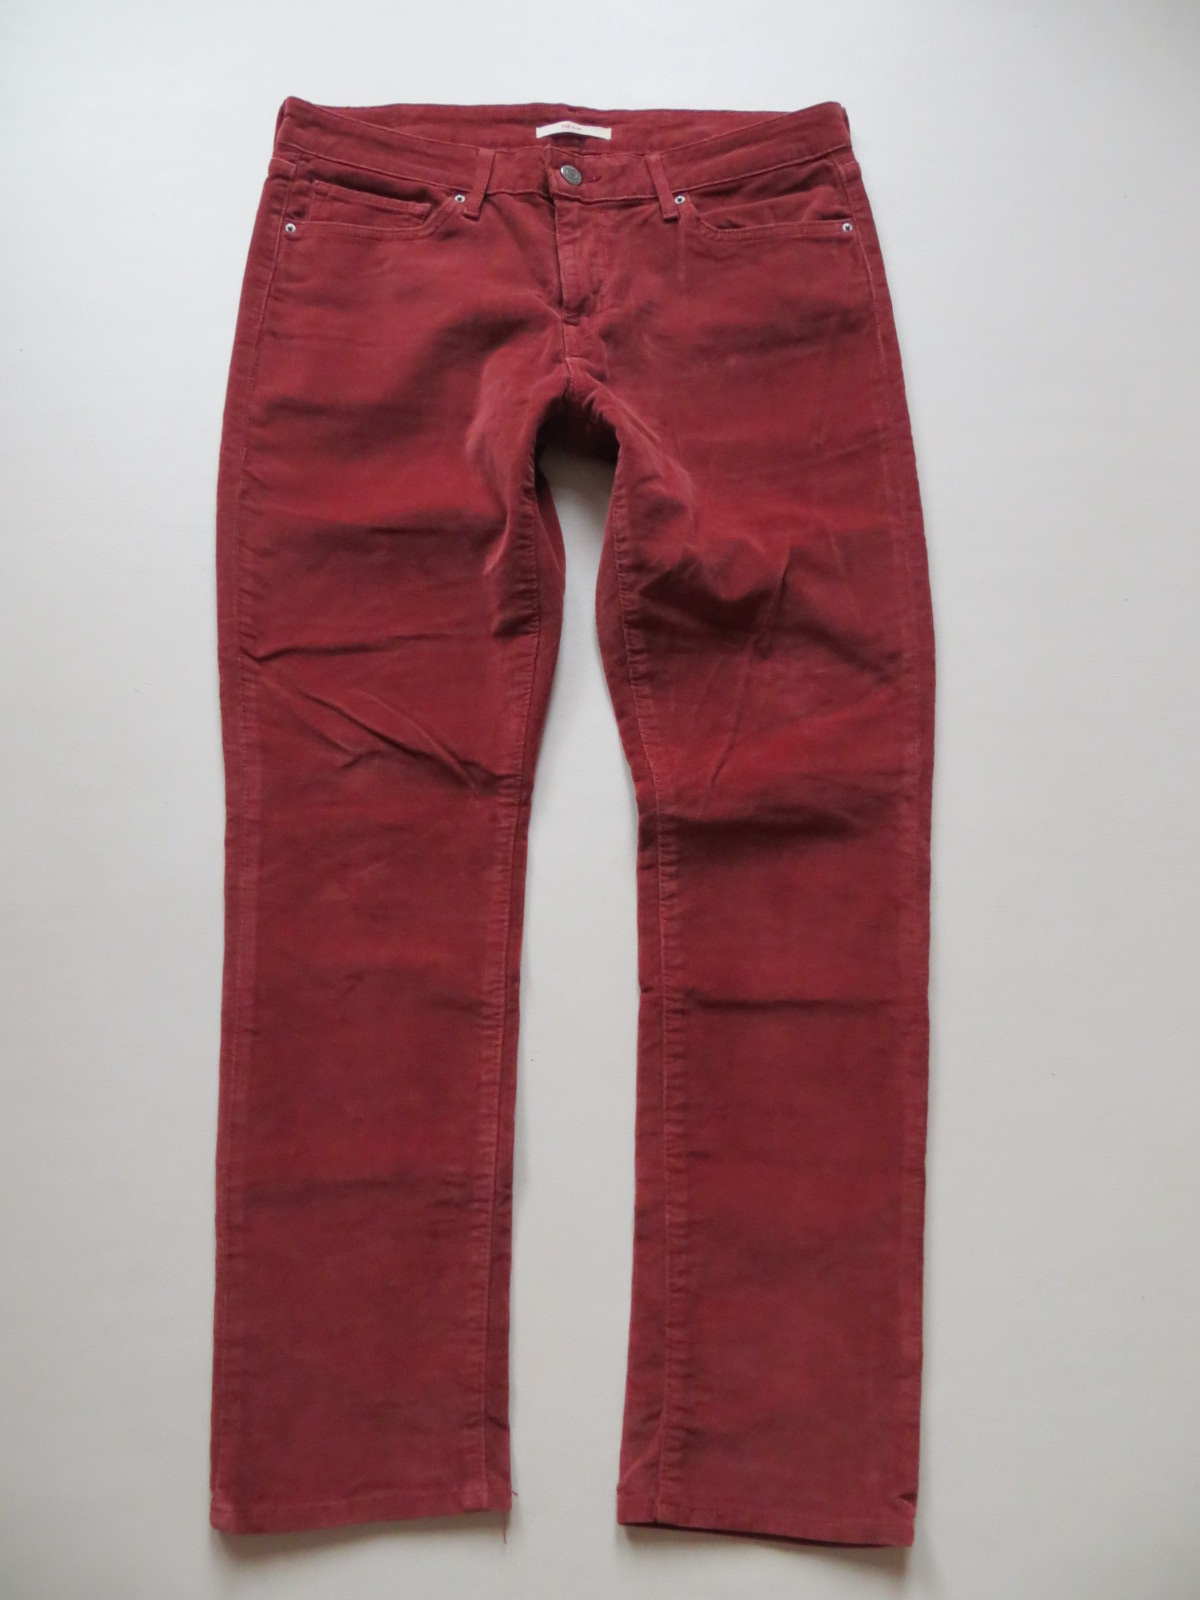 Levi's 712 Slim Cord Jeans Hose, W 33 /L 30, ROT coloured Cordhose, TOP ...